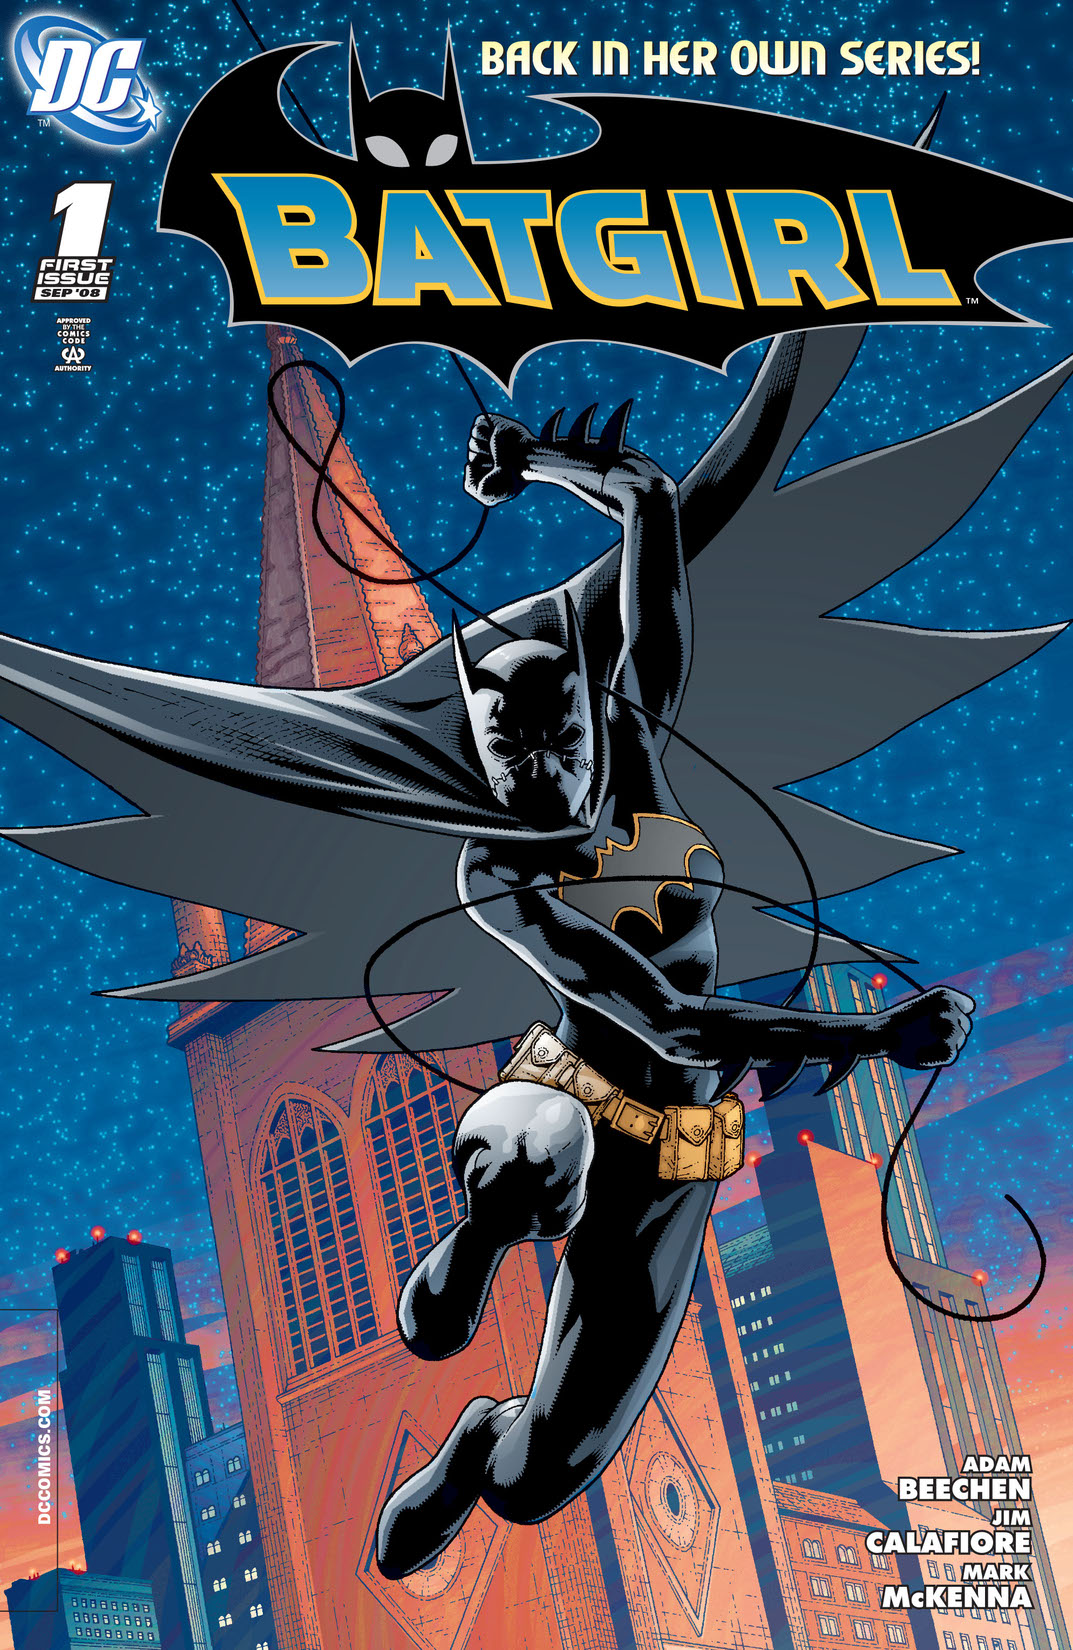 Batgirl (2008-) #1 preview images